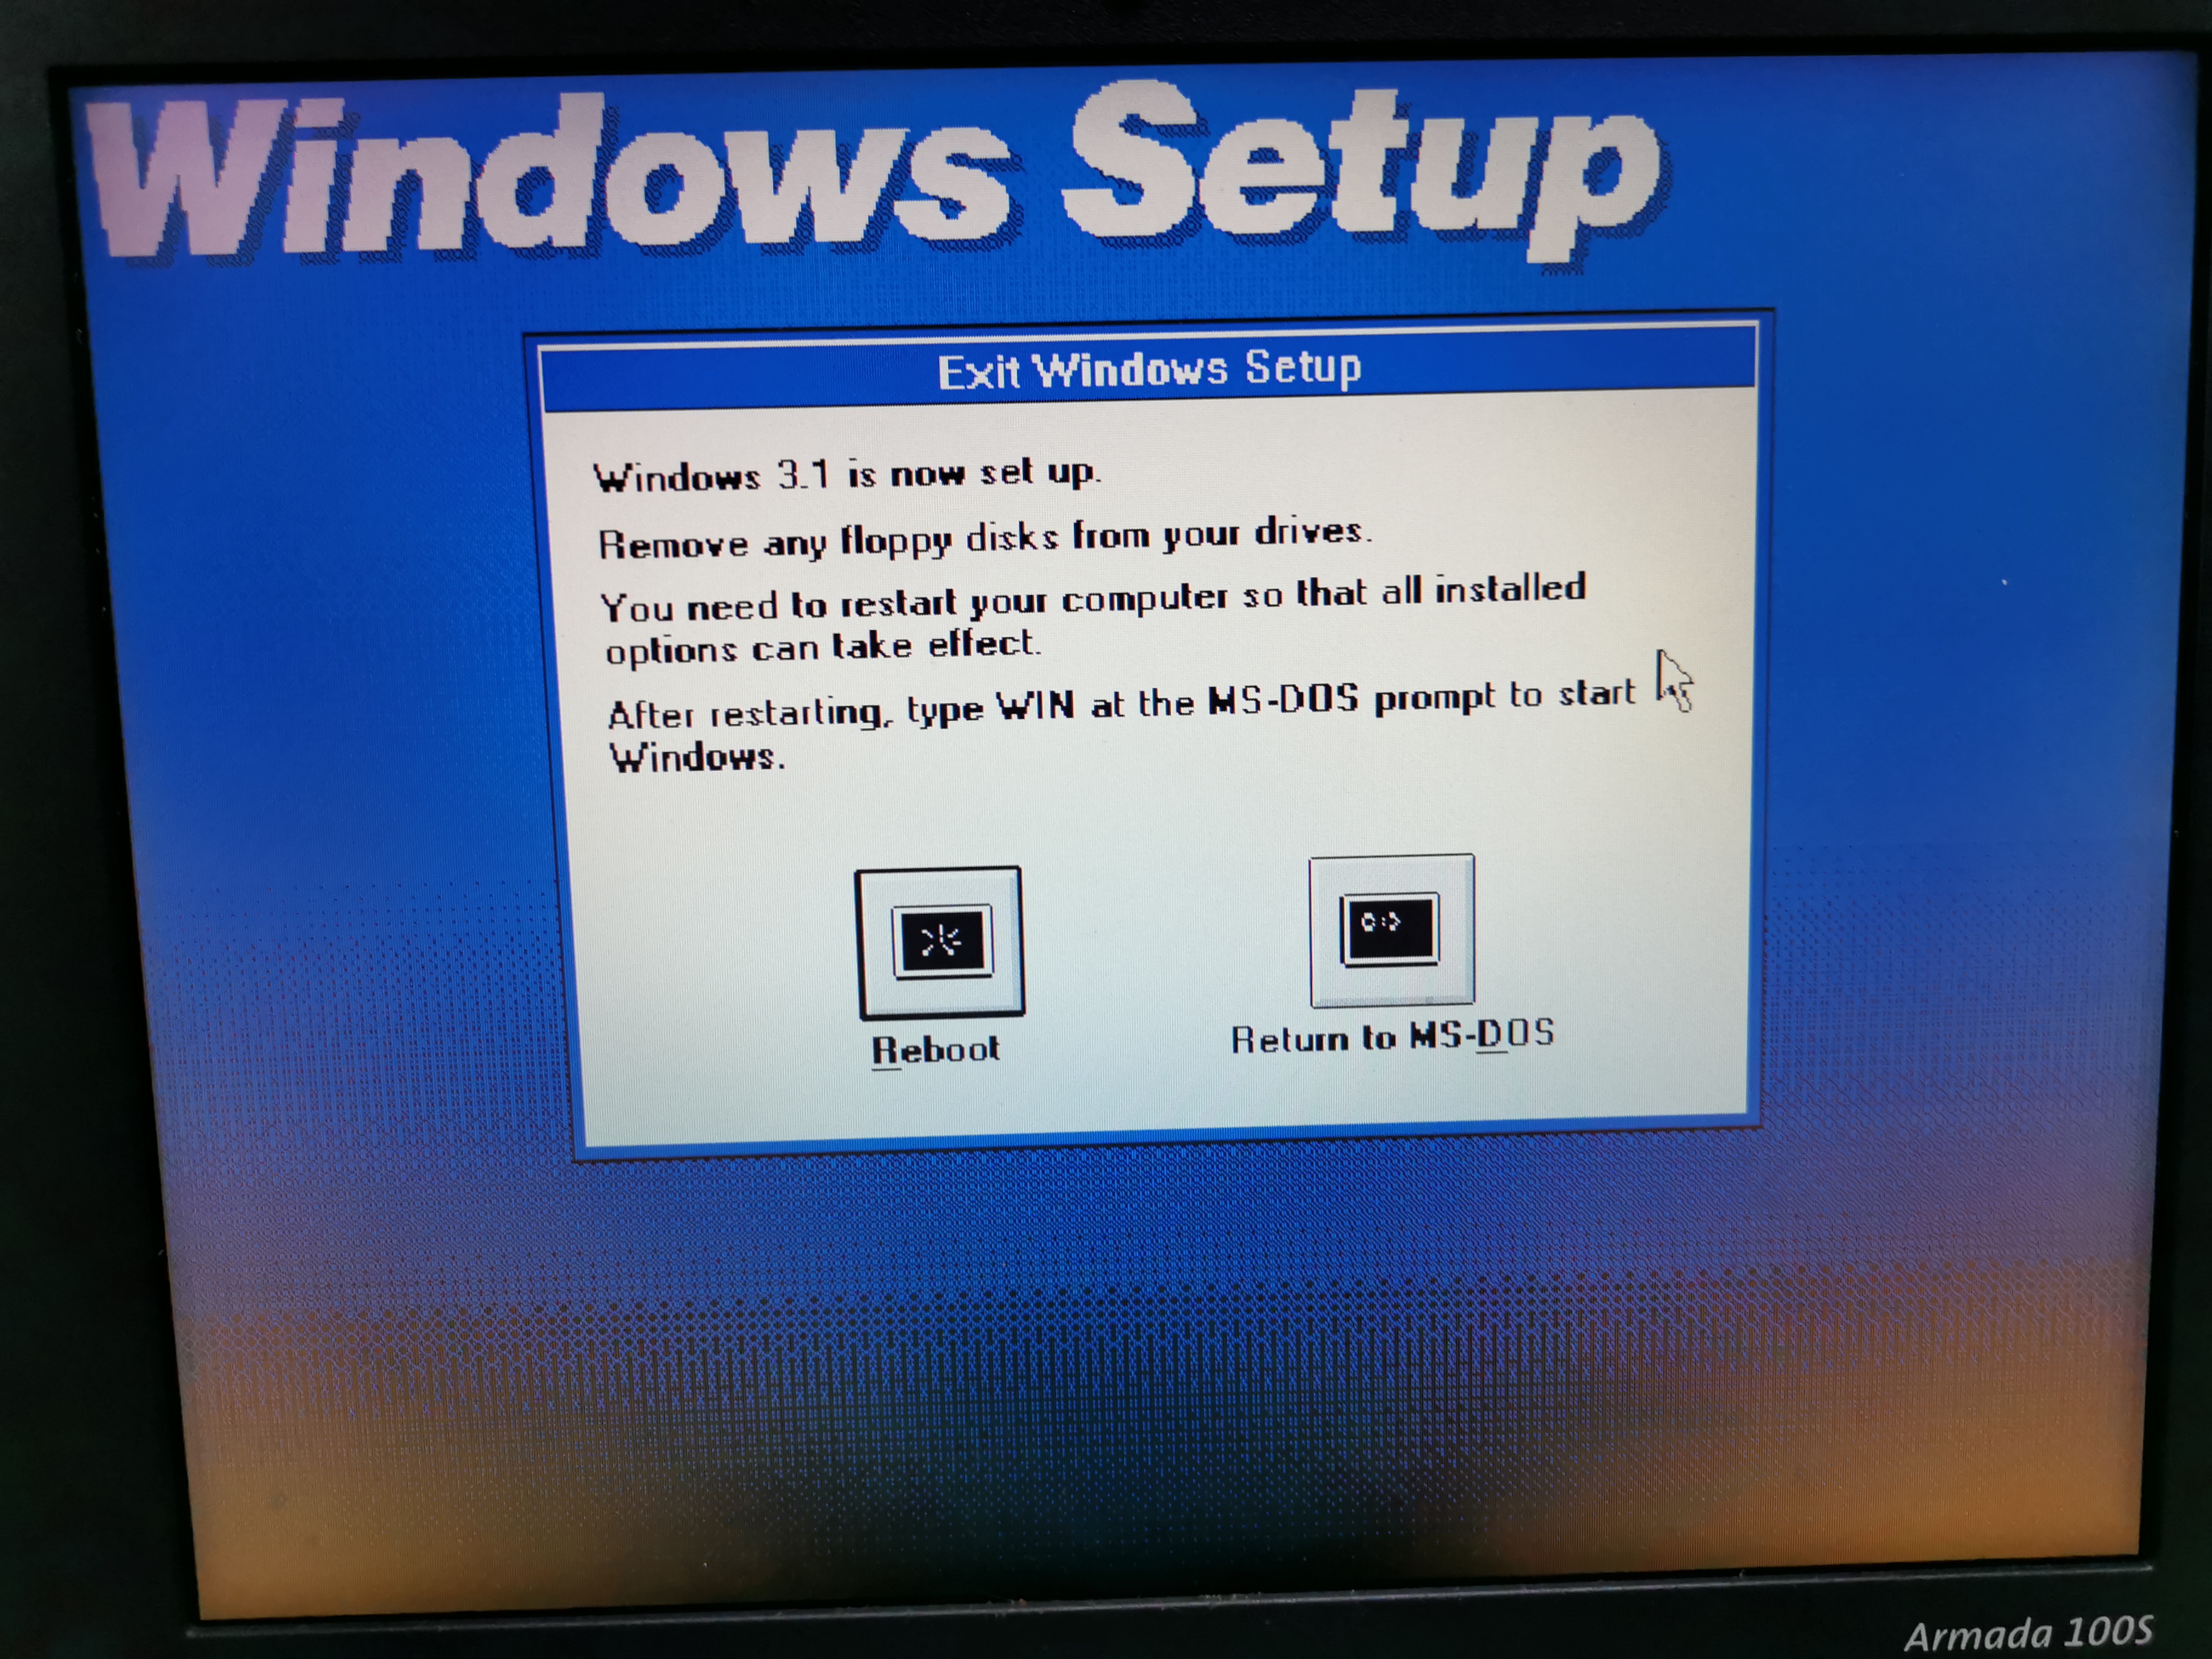 The Windows 3.11 installation finish GUI